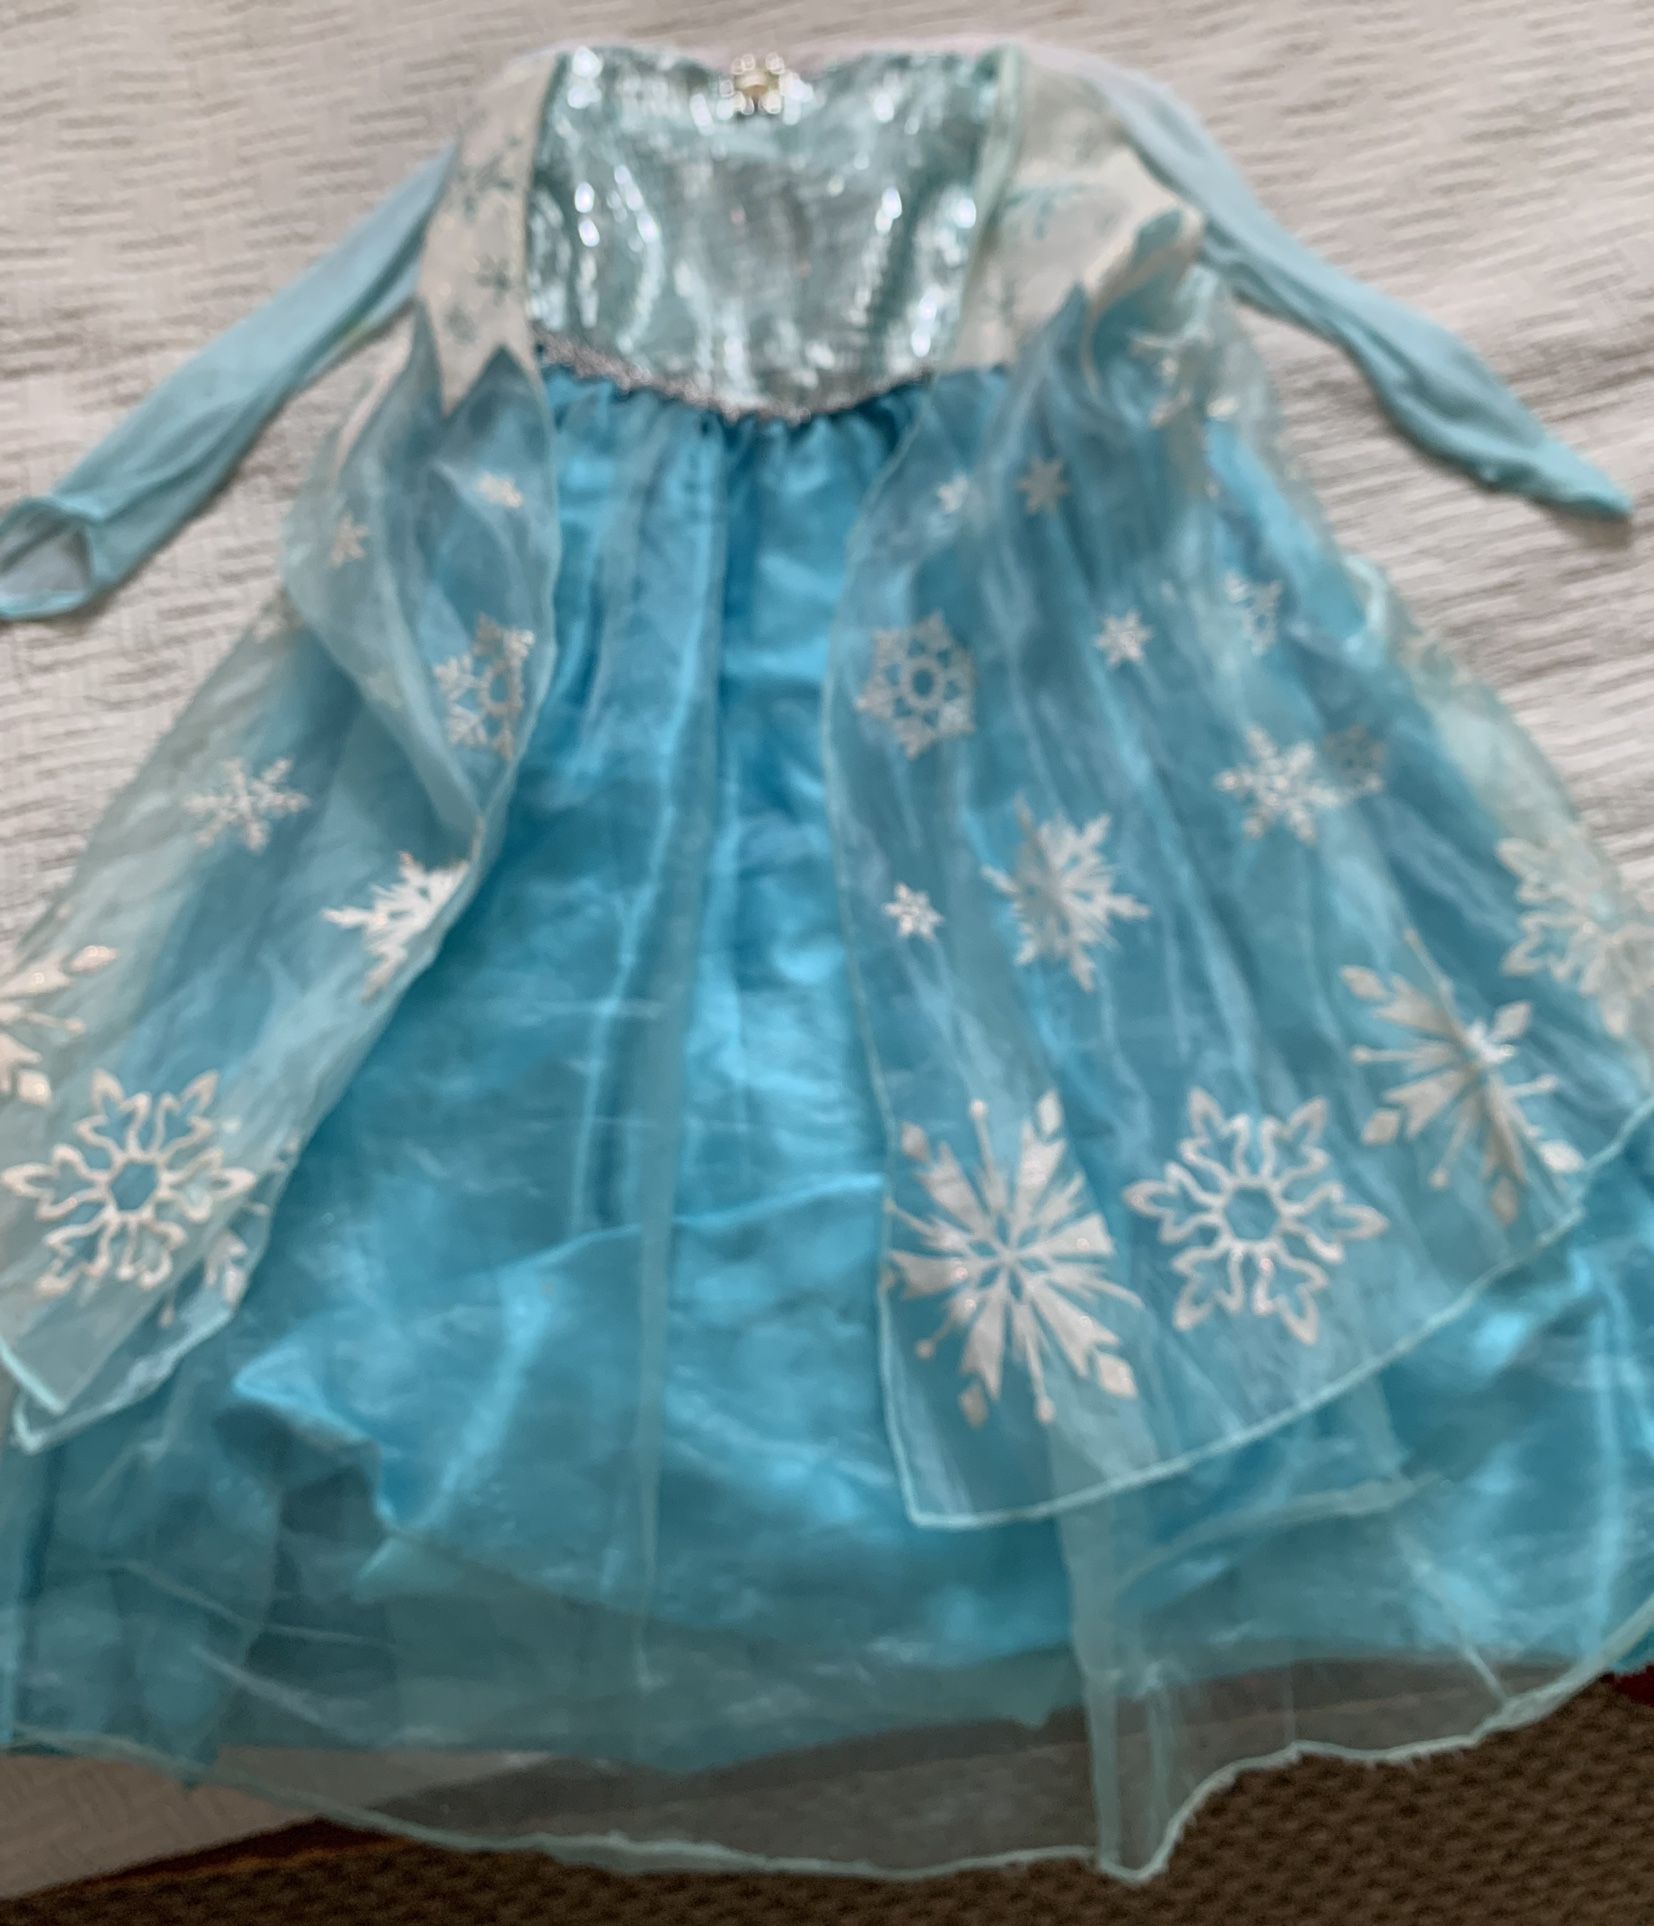 Disney Store Girl’s Frozen Elsa costume dress size 7/8